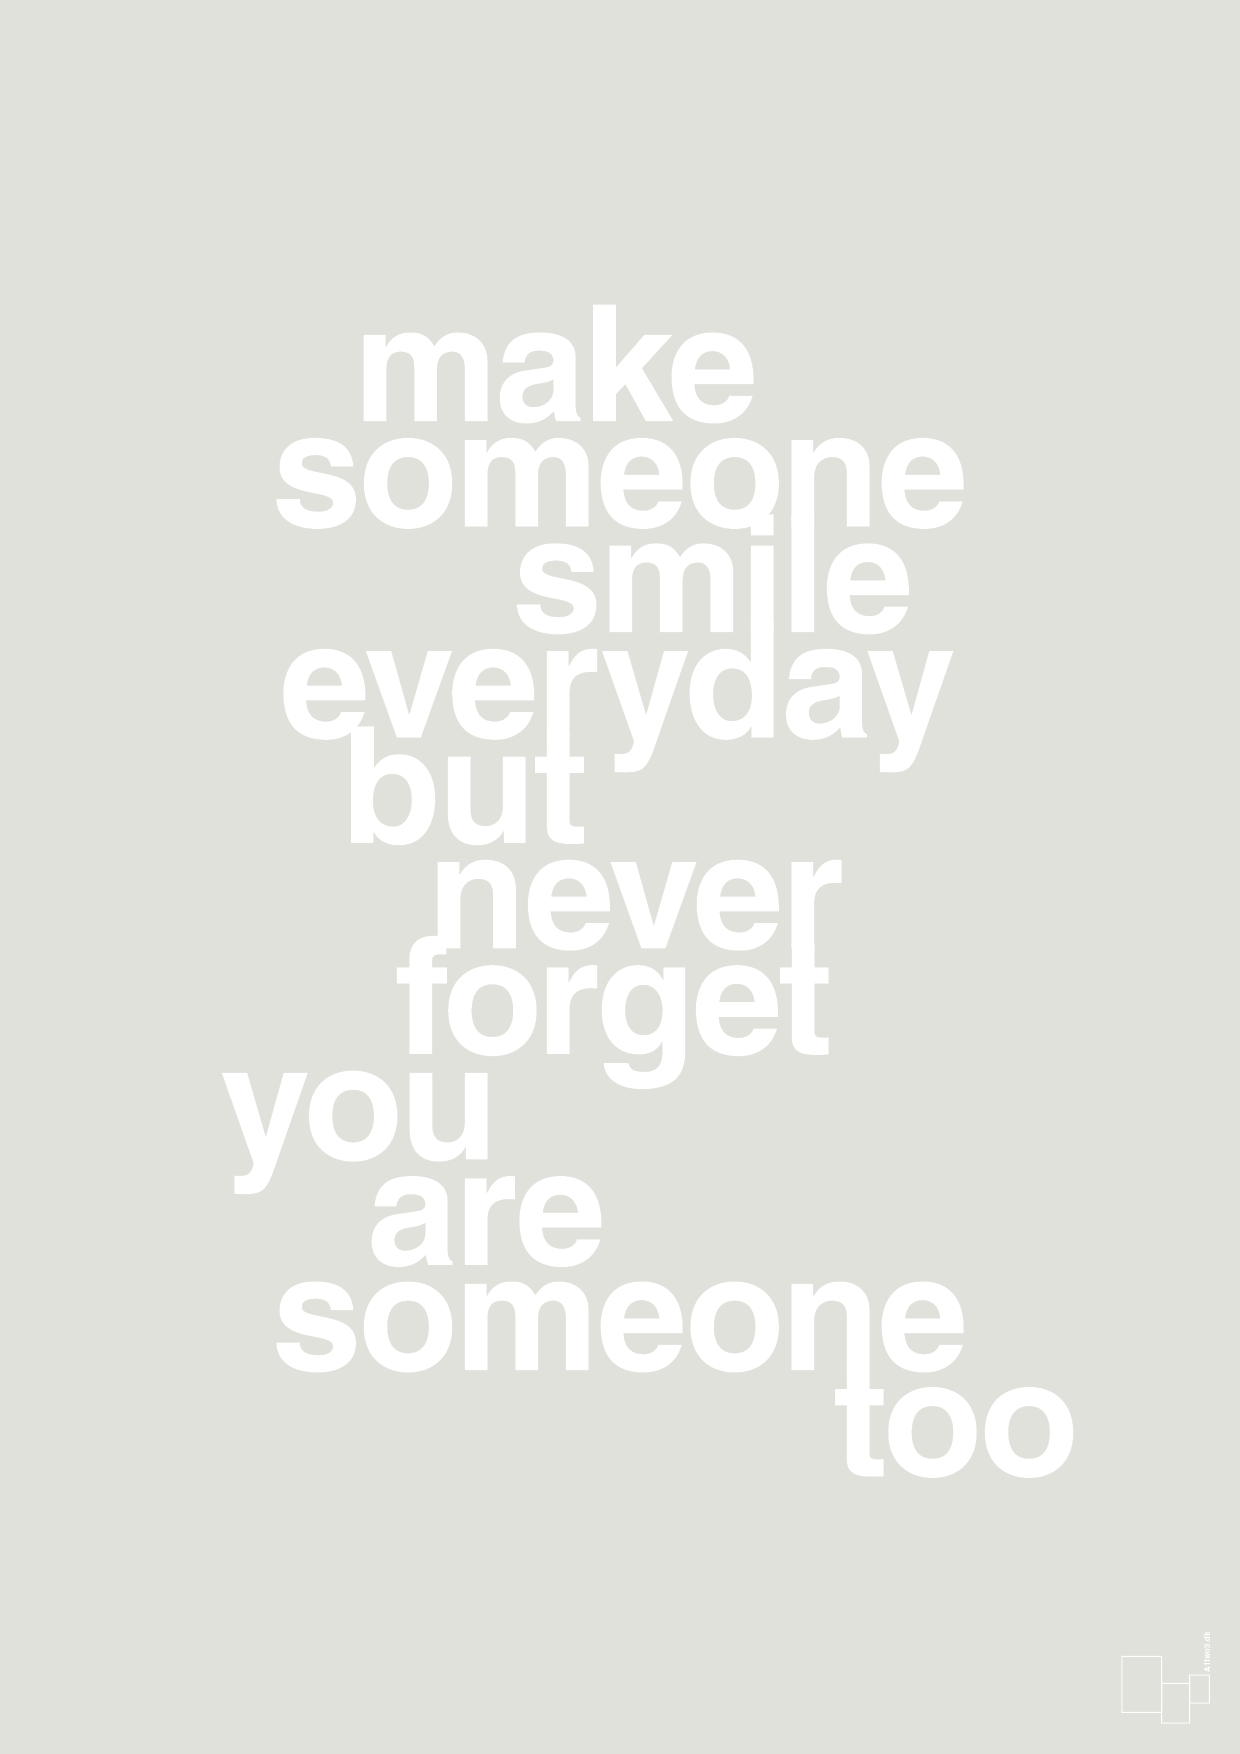 make someone smile everyday - Plakat med Ordsprog i Painters White